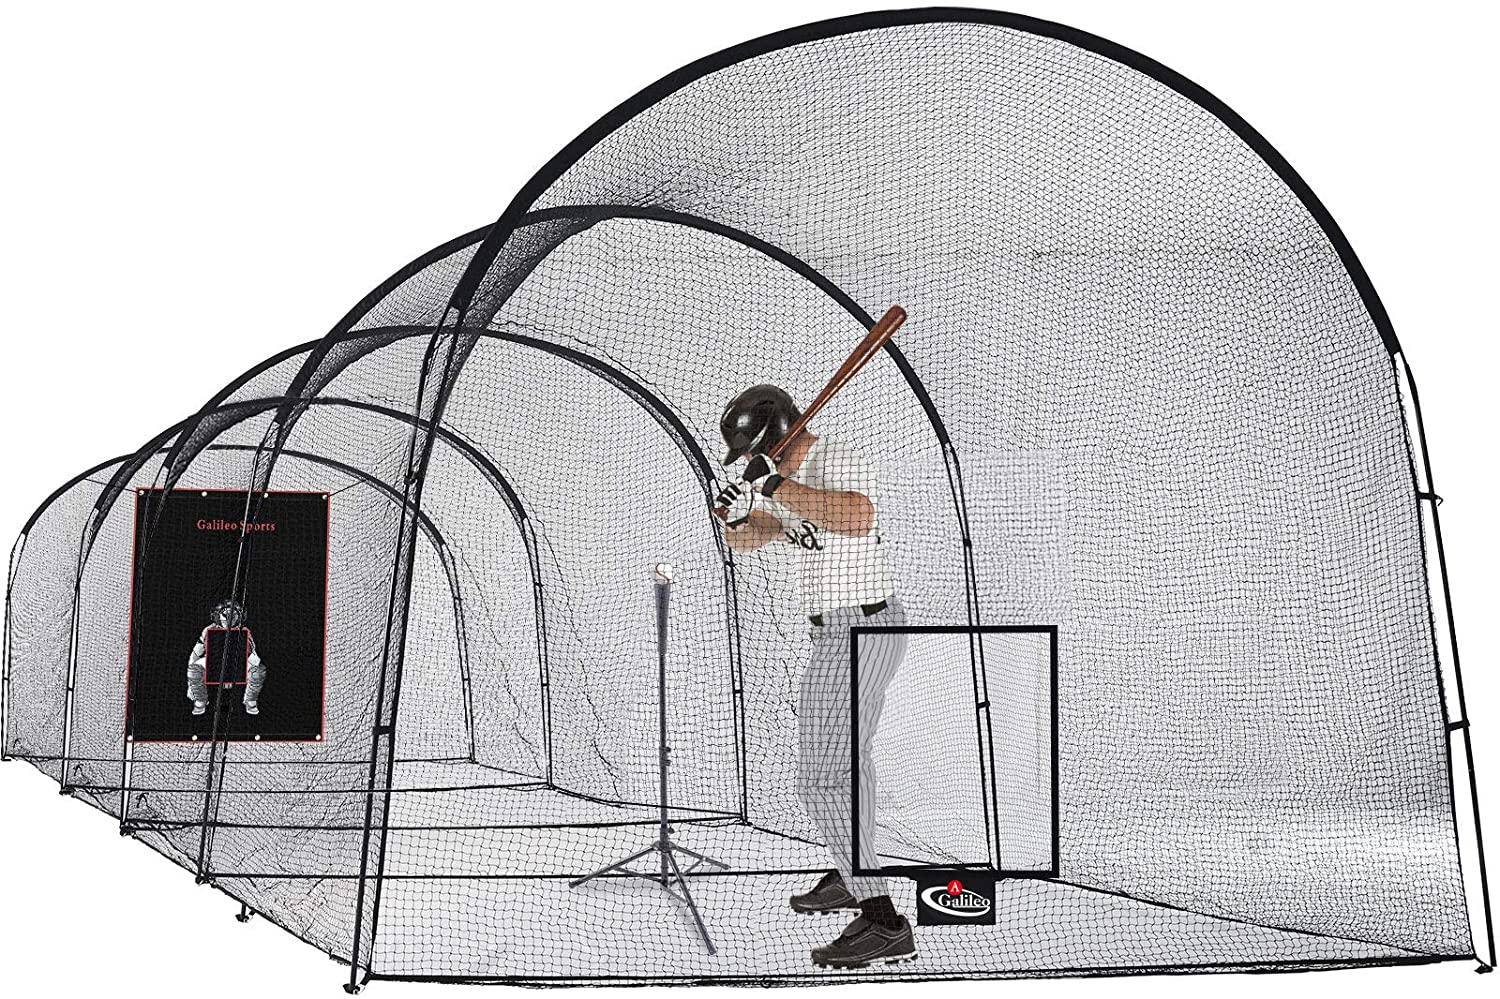 Cage de baseball de cage de frappeur 44X12X10/filet robuste